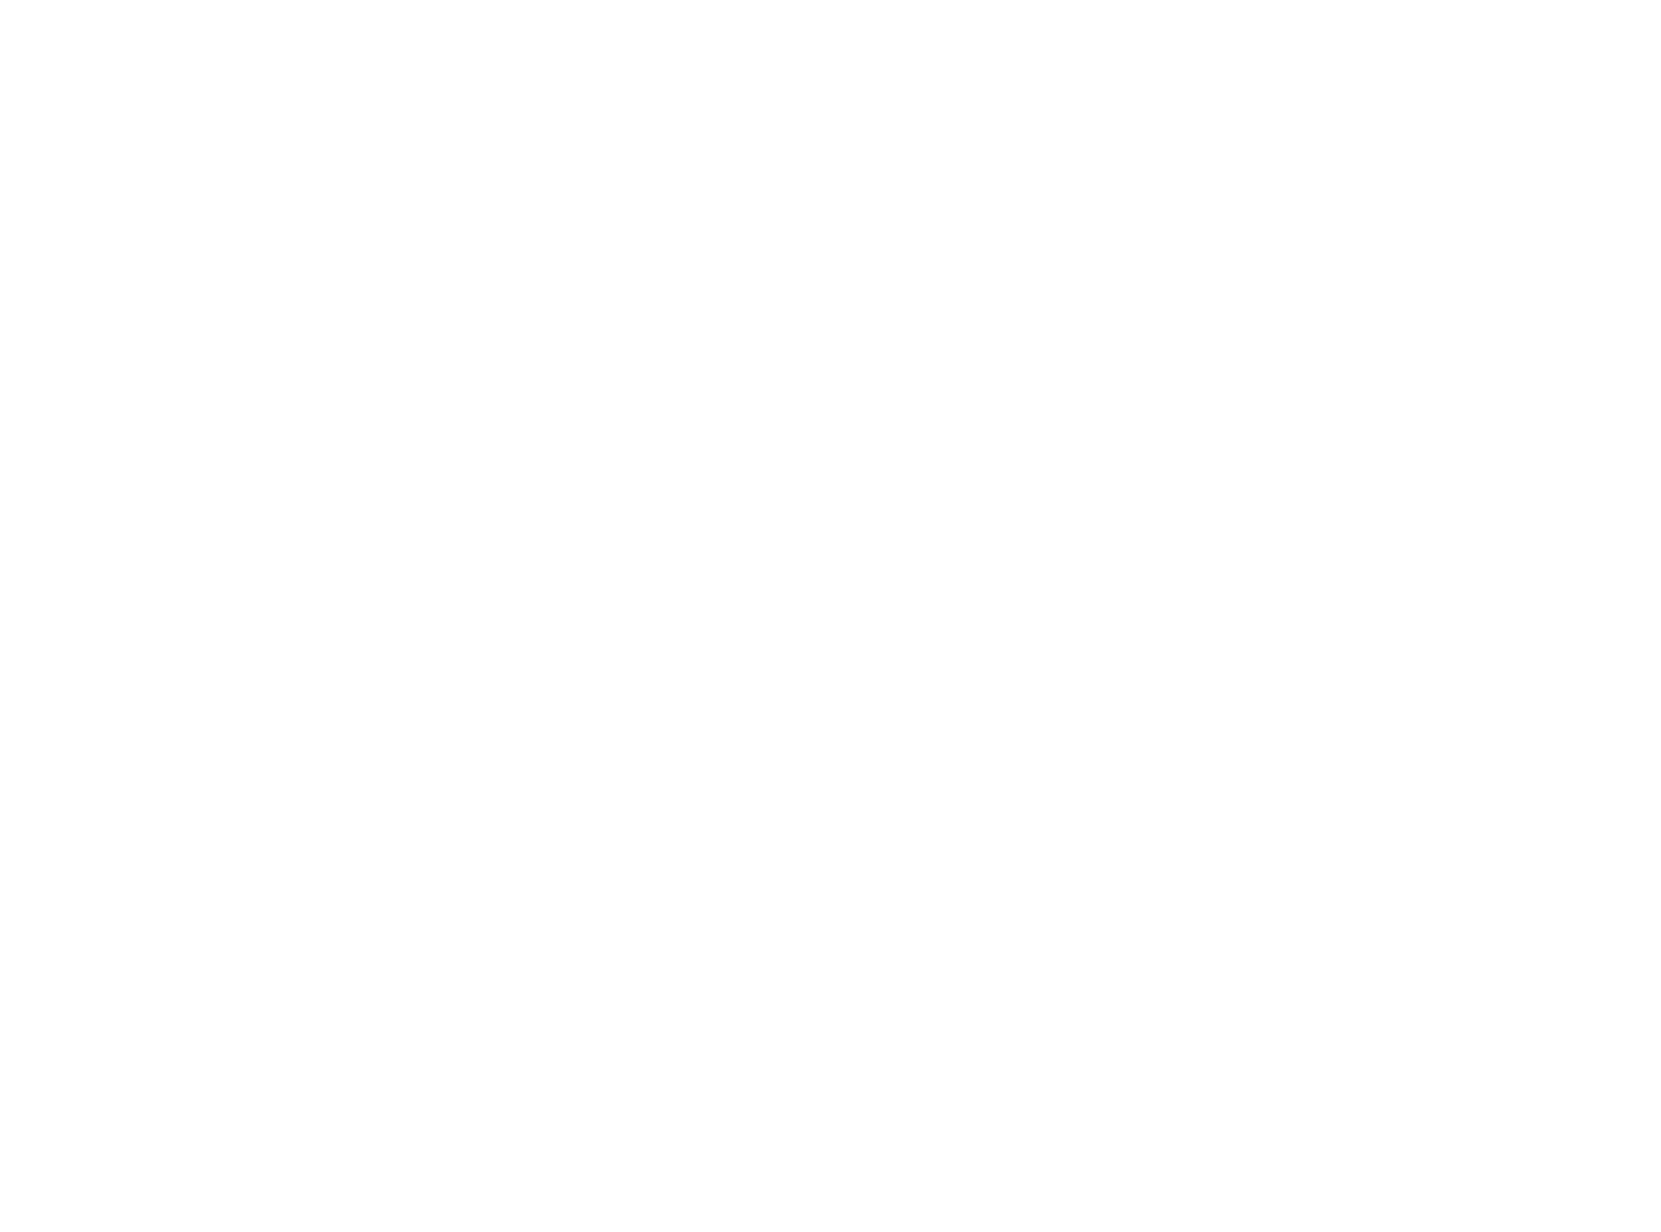 Carly Edelstein for Judge - Endorsed Democrat